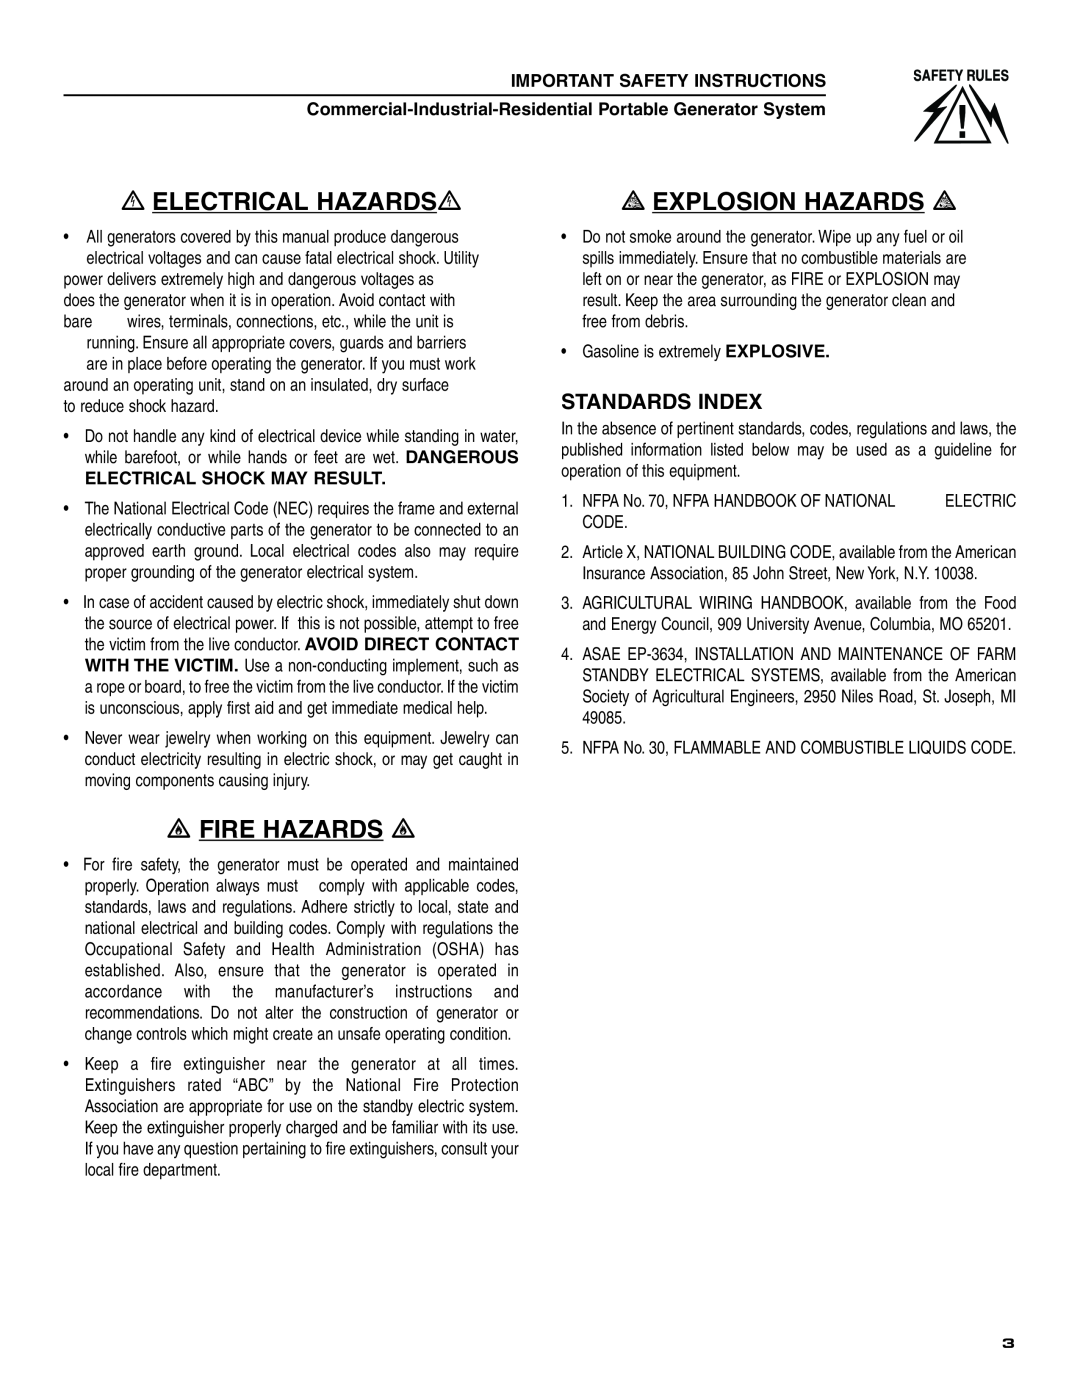 Generac 004451, 004582 Electrical Hazards, Explosion Hazards, Fire Hazards, Standards Index, Important Safety Instructions 